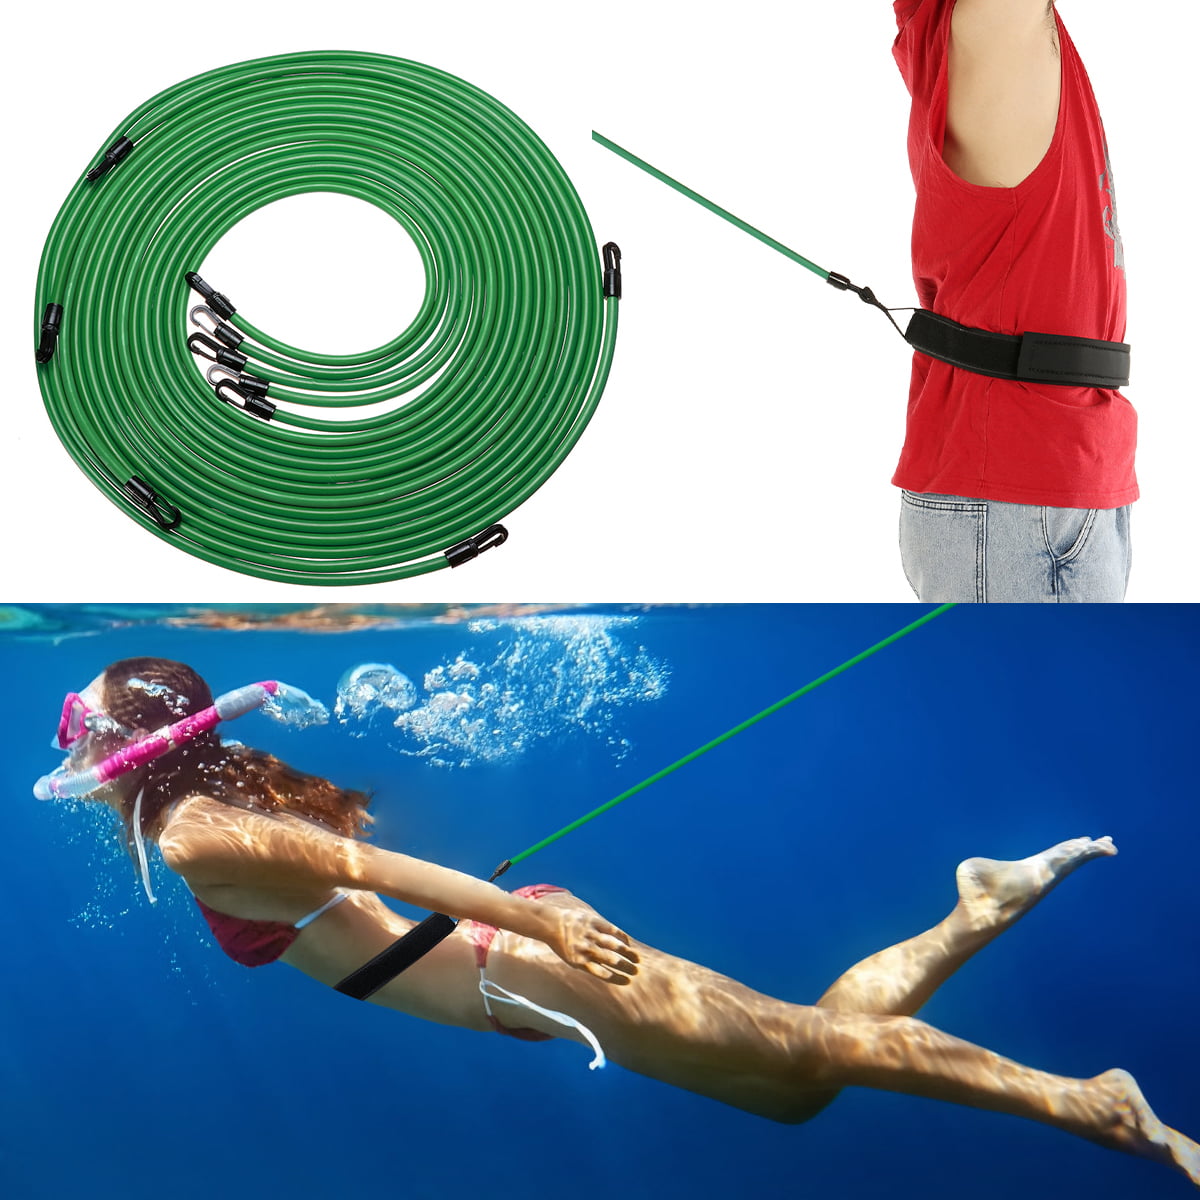 Swimming Training Bungee Cord Resistance Band Belt Trainer Swim Equipment 